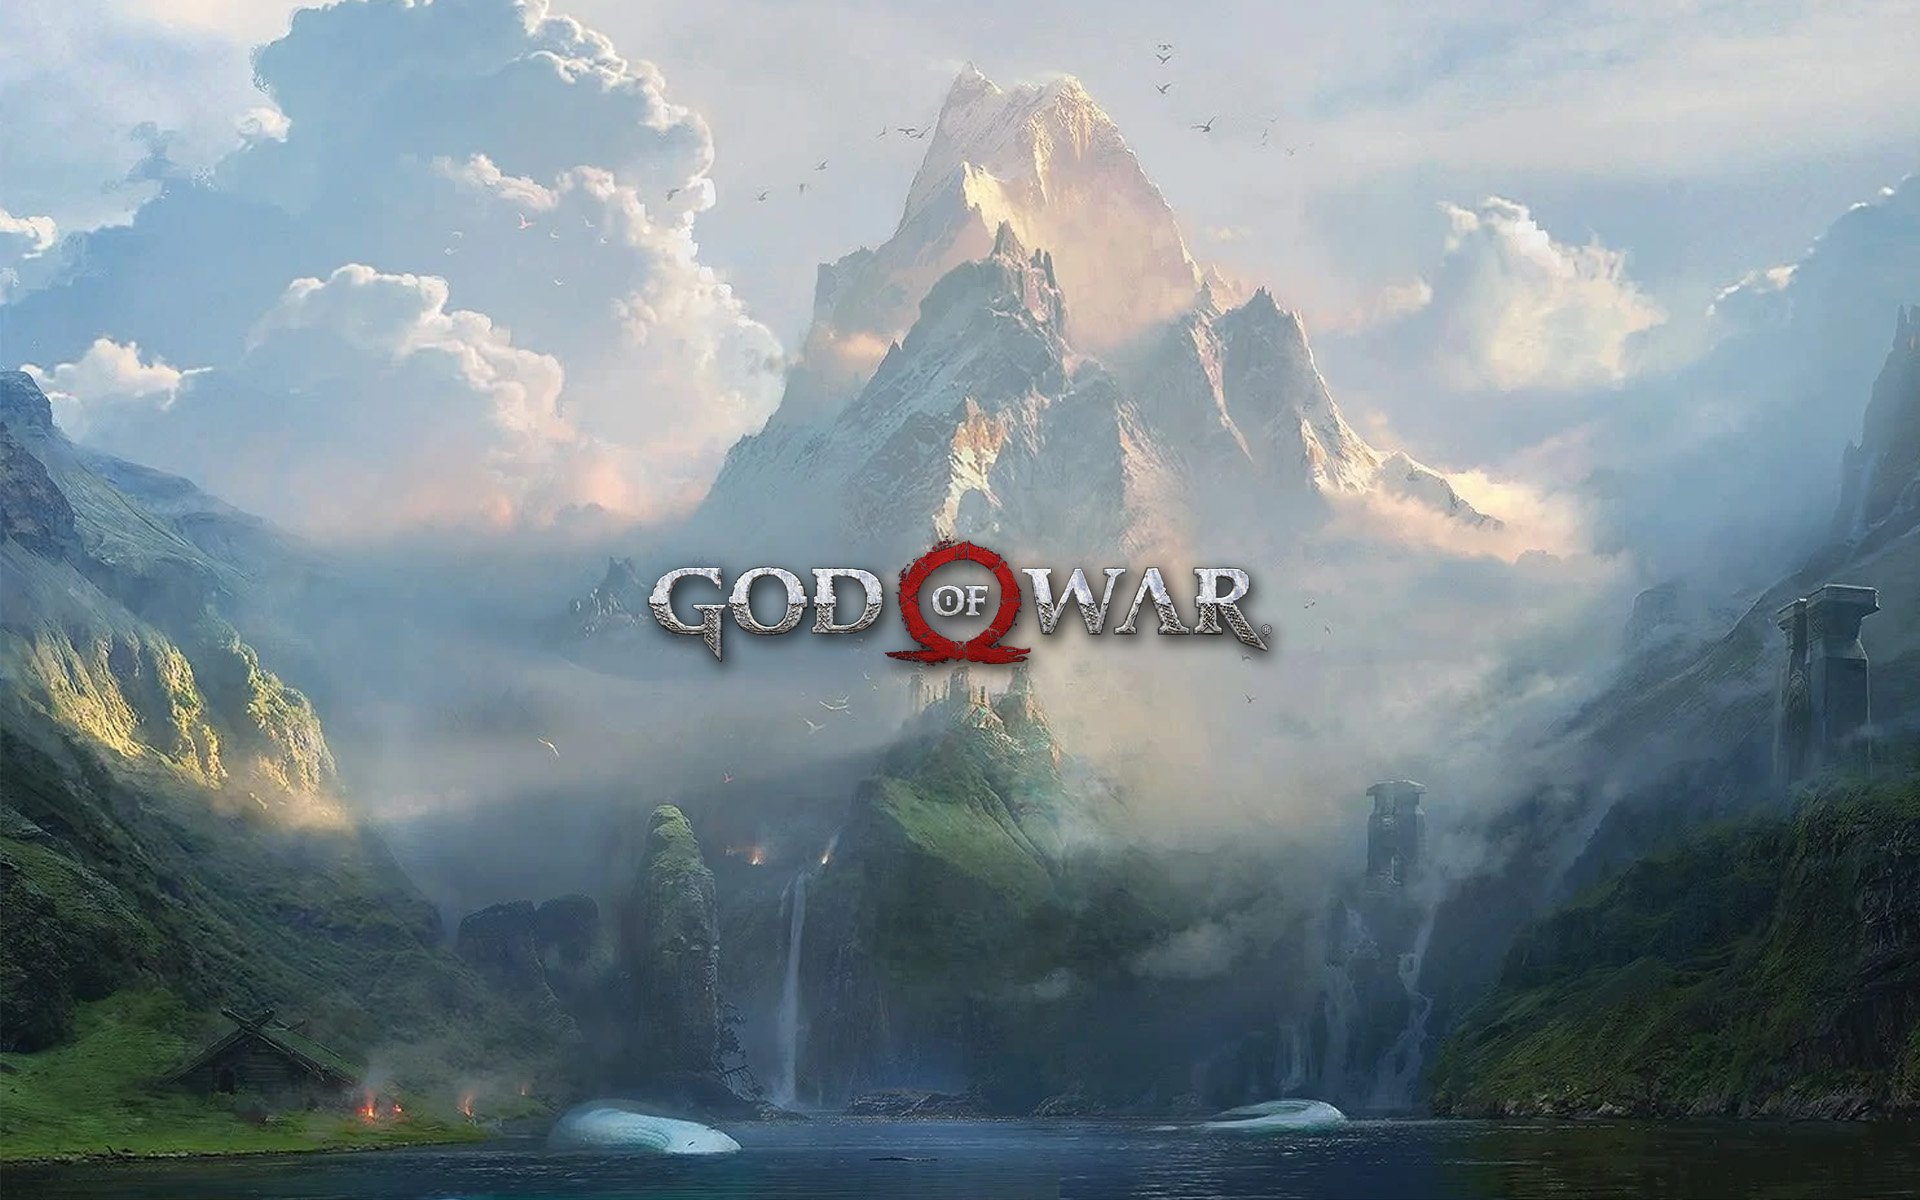 Compre GOD OF WAR a partir de R$ 199.90